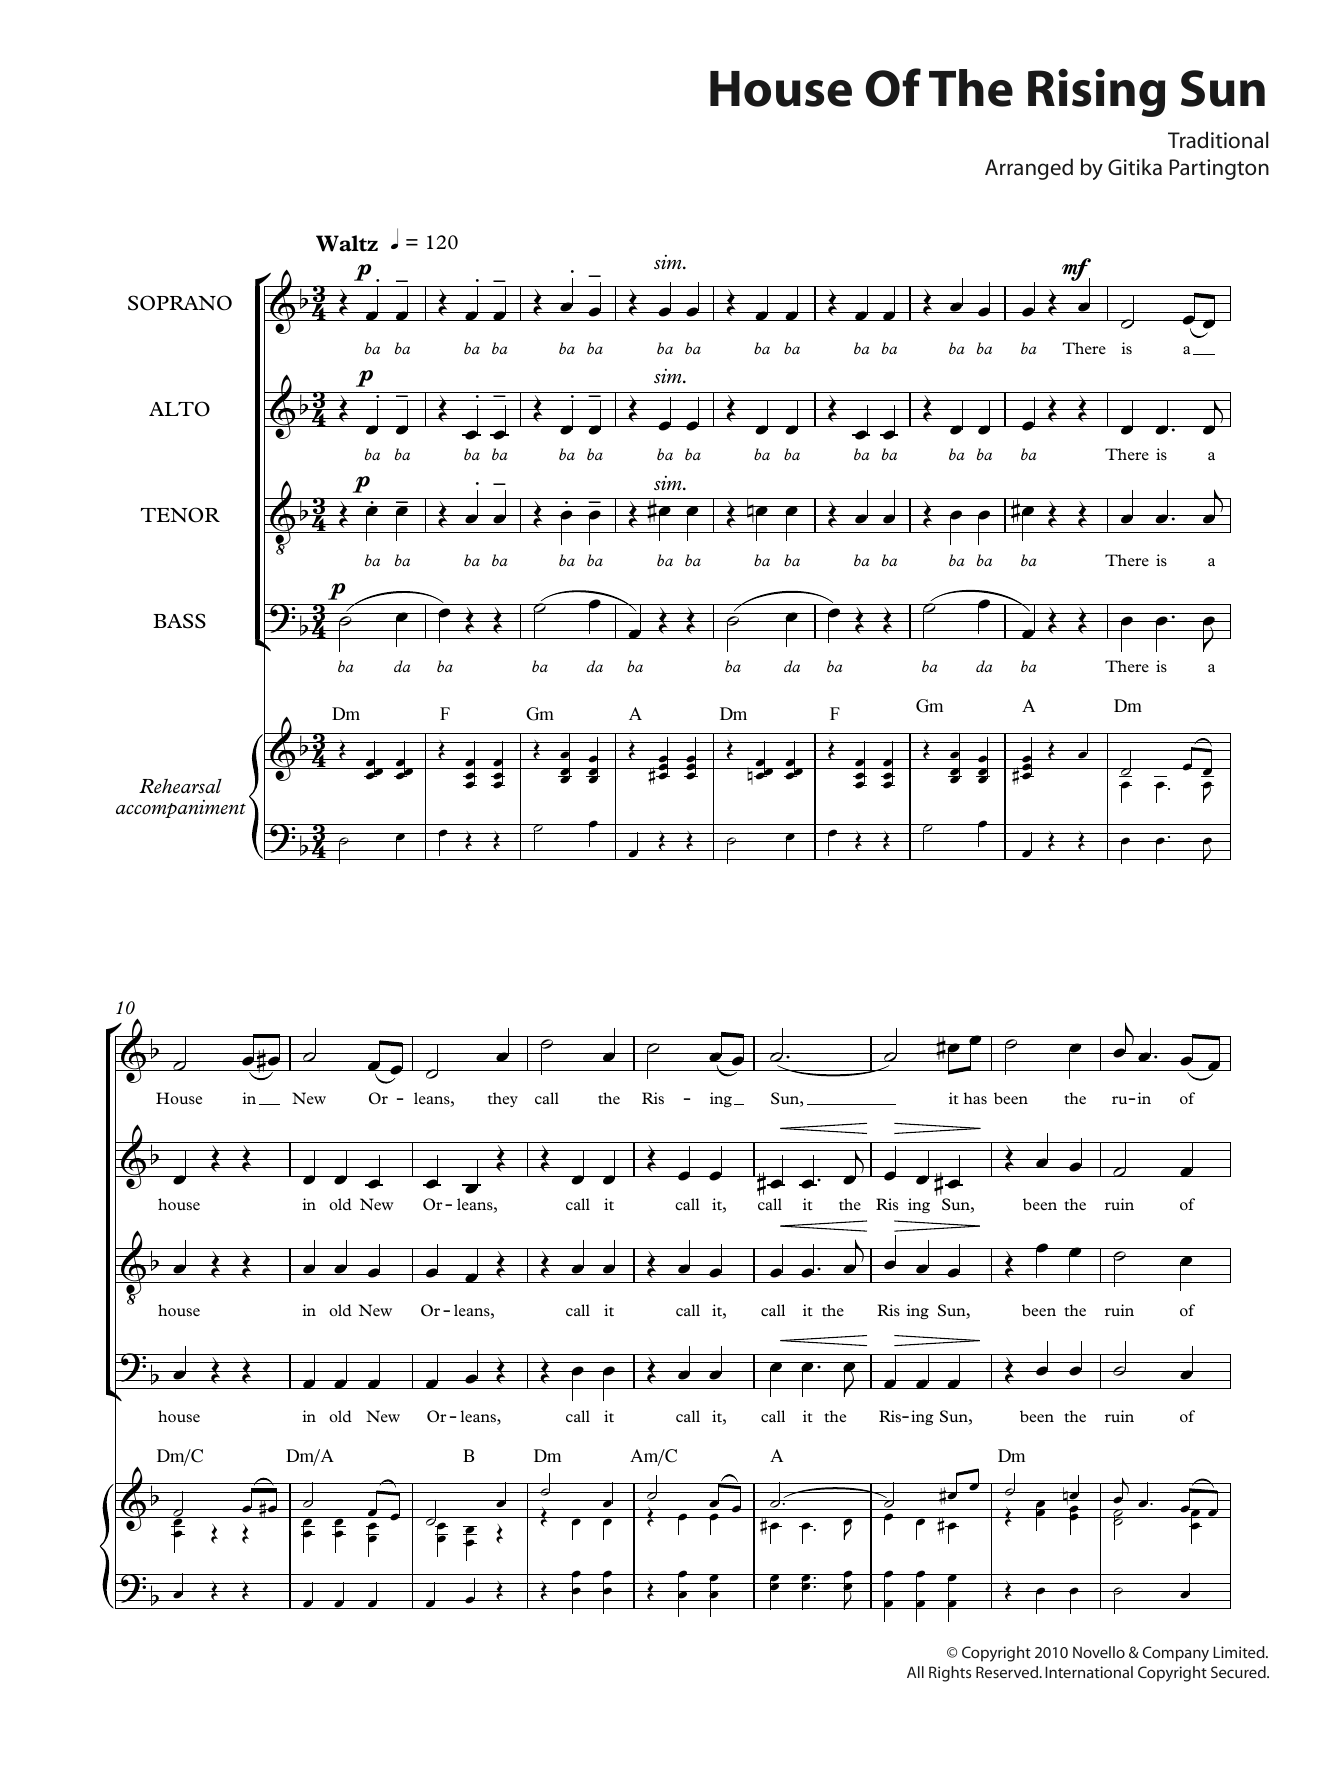 Traditional House Of The Rising Sun (arr. Gitika Partington) sheet music notes and chords arranged for SATB Choir